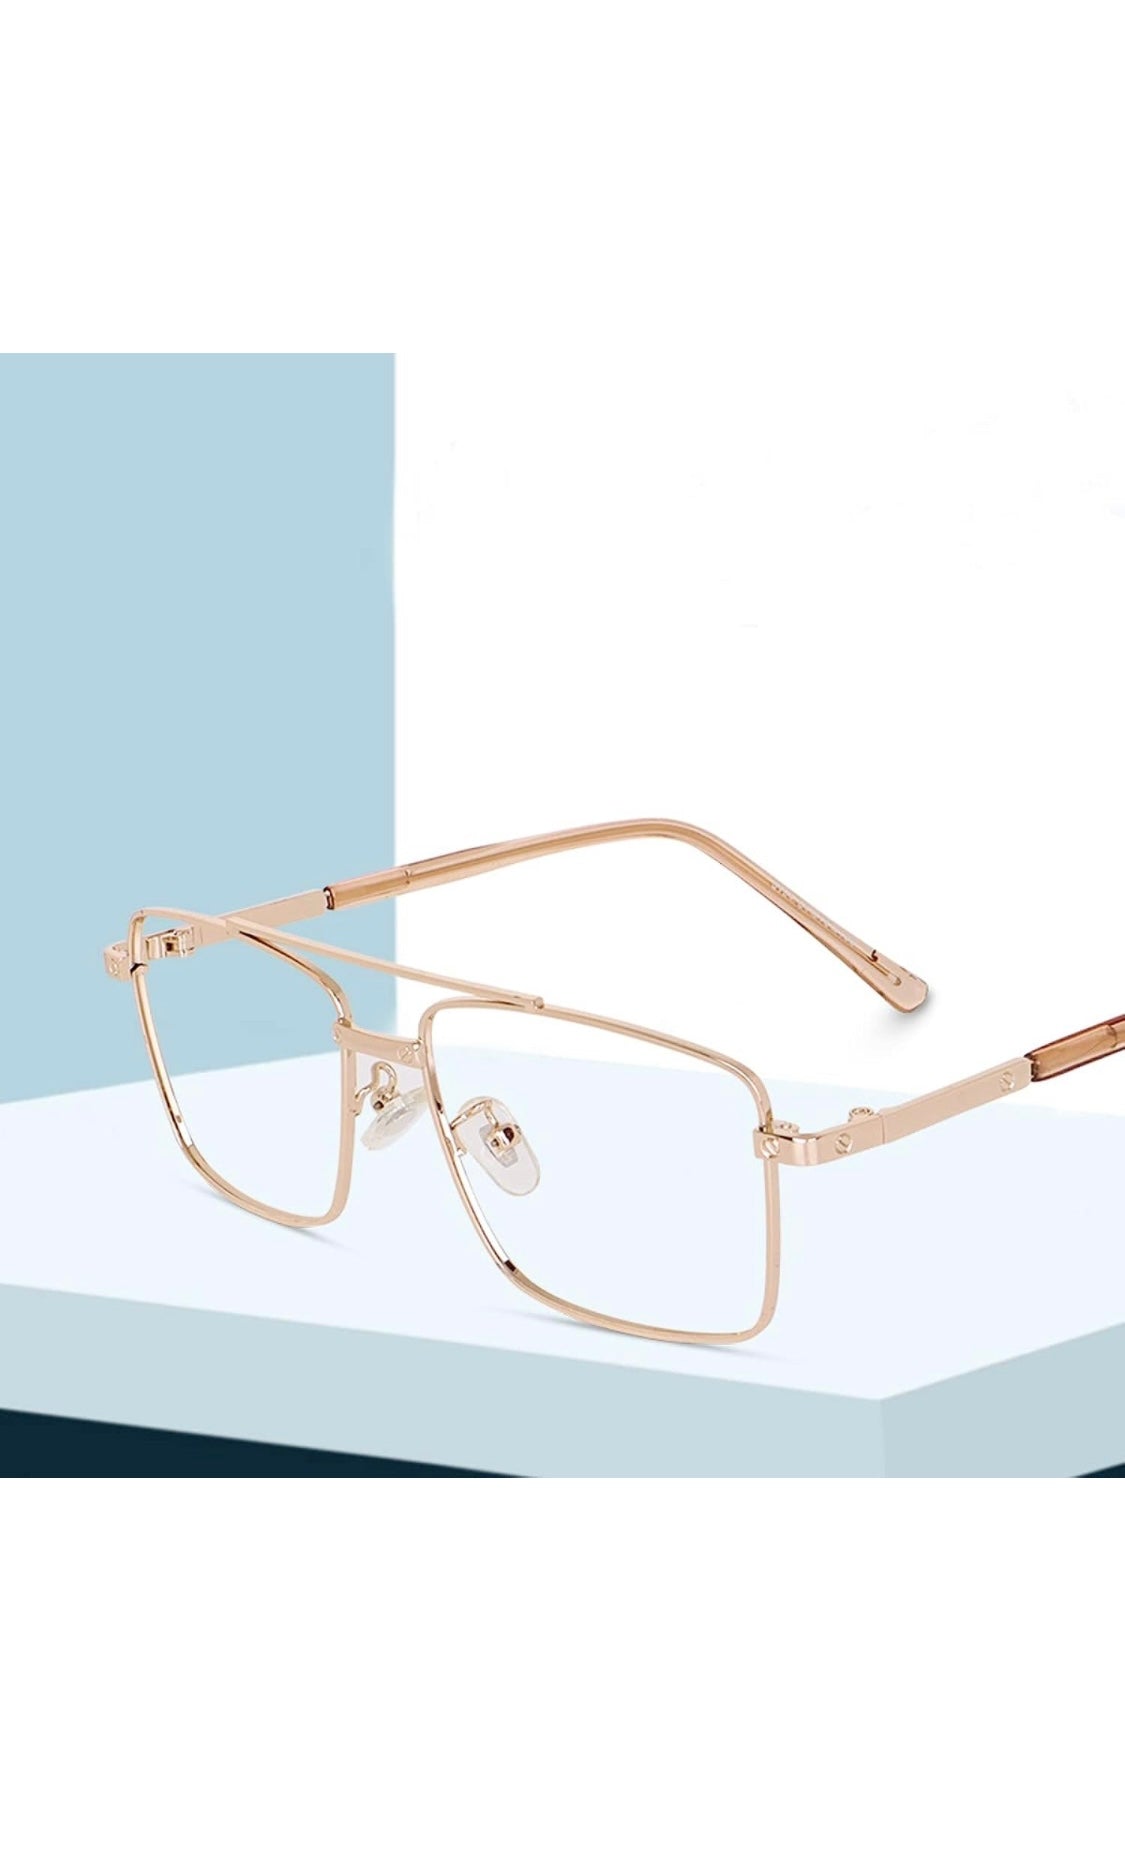 Jodykoes® New Full Rim Rectangular Blue Light Protection Computer Eyeglasses Metal Frame With Anti Glare and Blu Cut Glasses Spectacles for Men and Women Eyewear (Gold) - Jodykoes ®